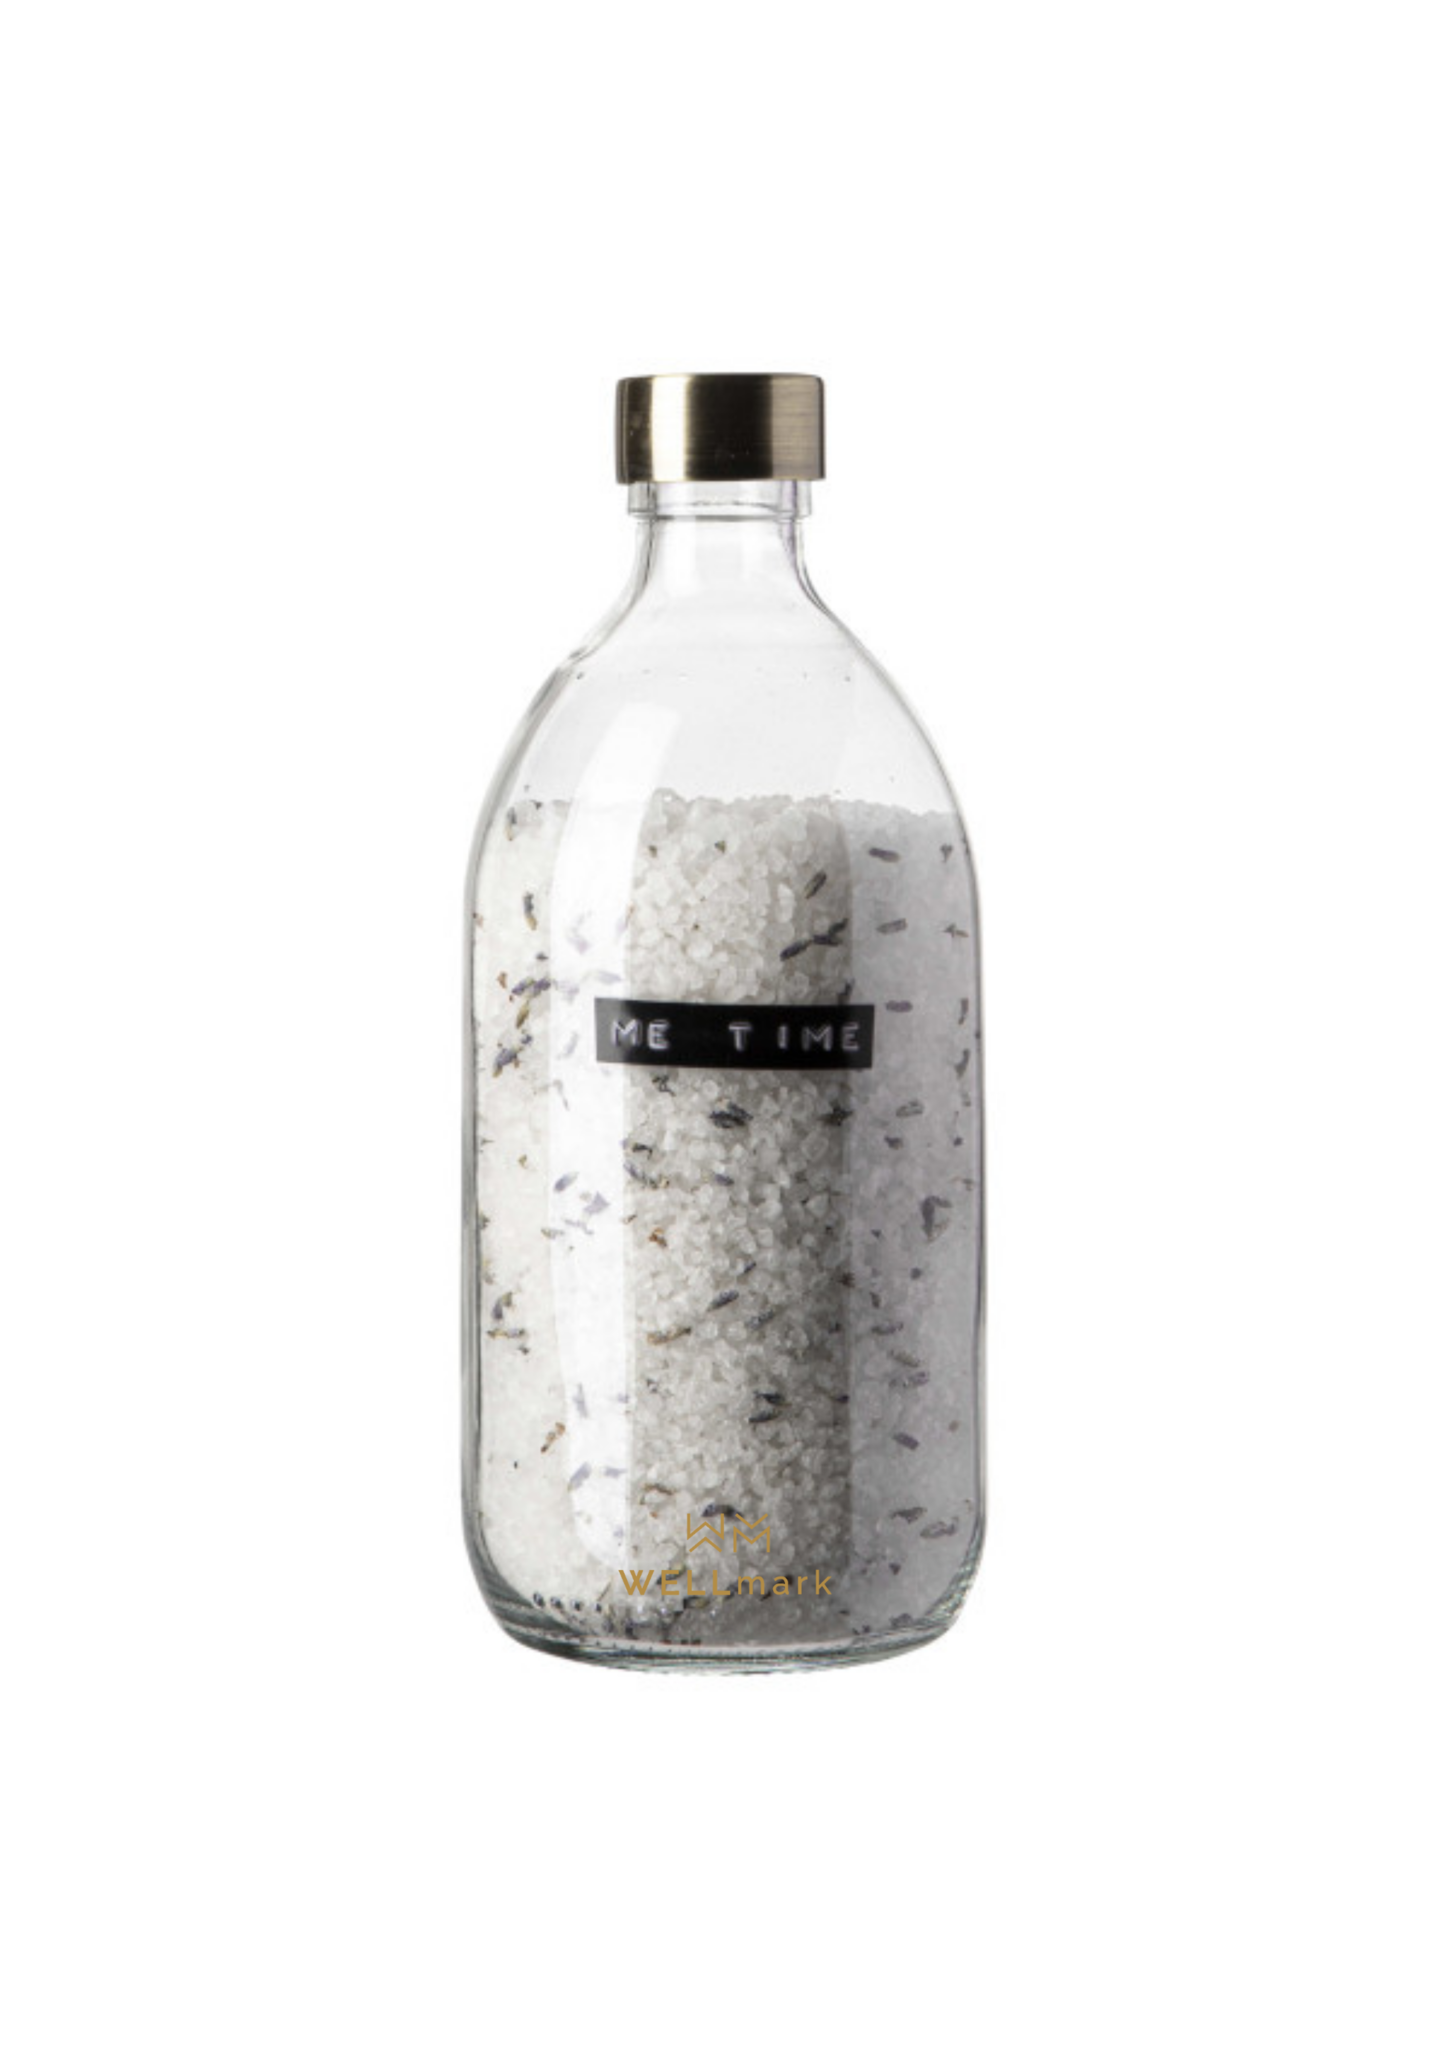 Wellmark - bath salt transparant/brass lavender 500ml - me time